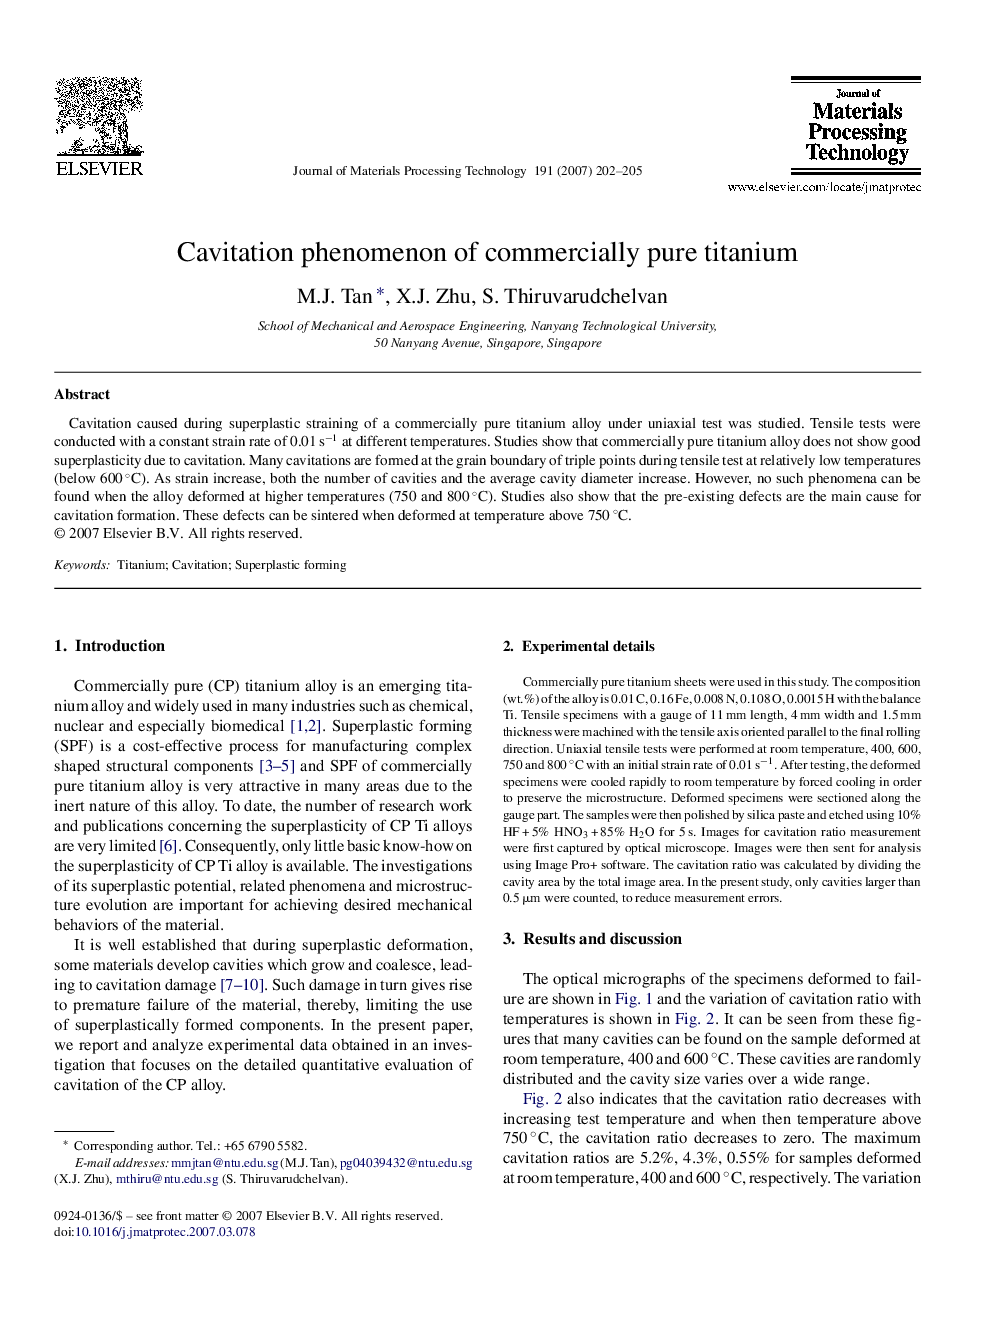 Cavitation phenomenon of commercially pure titanium